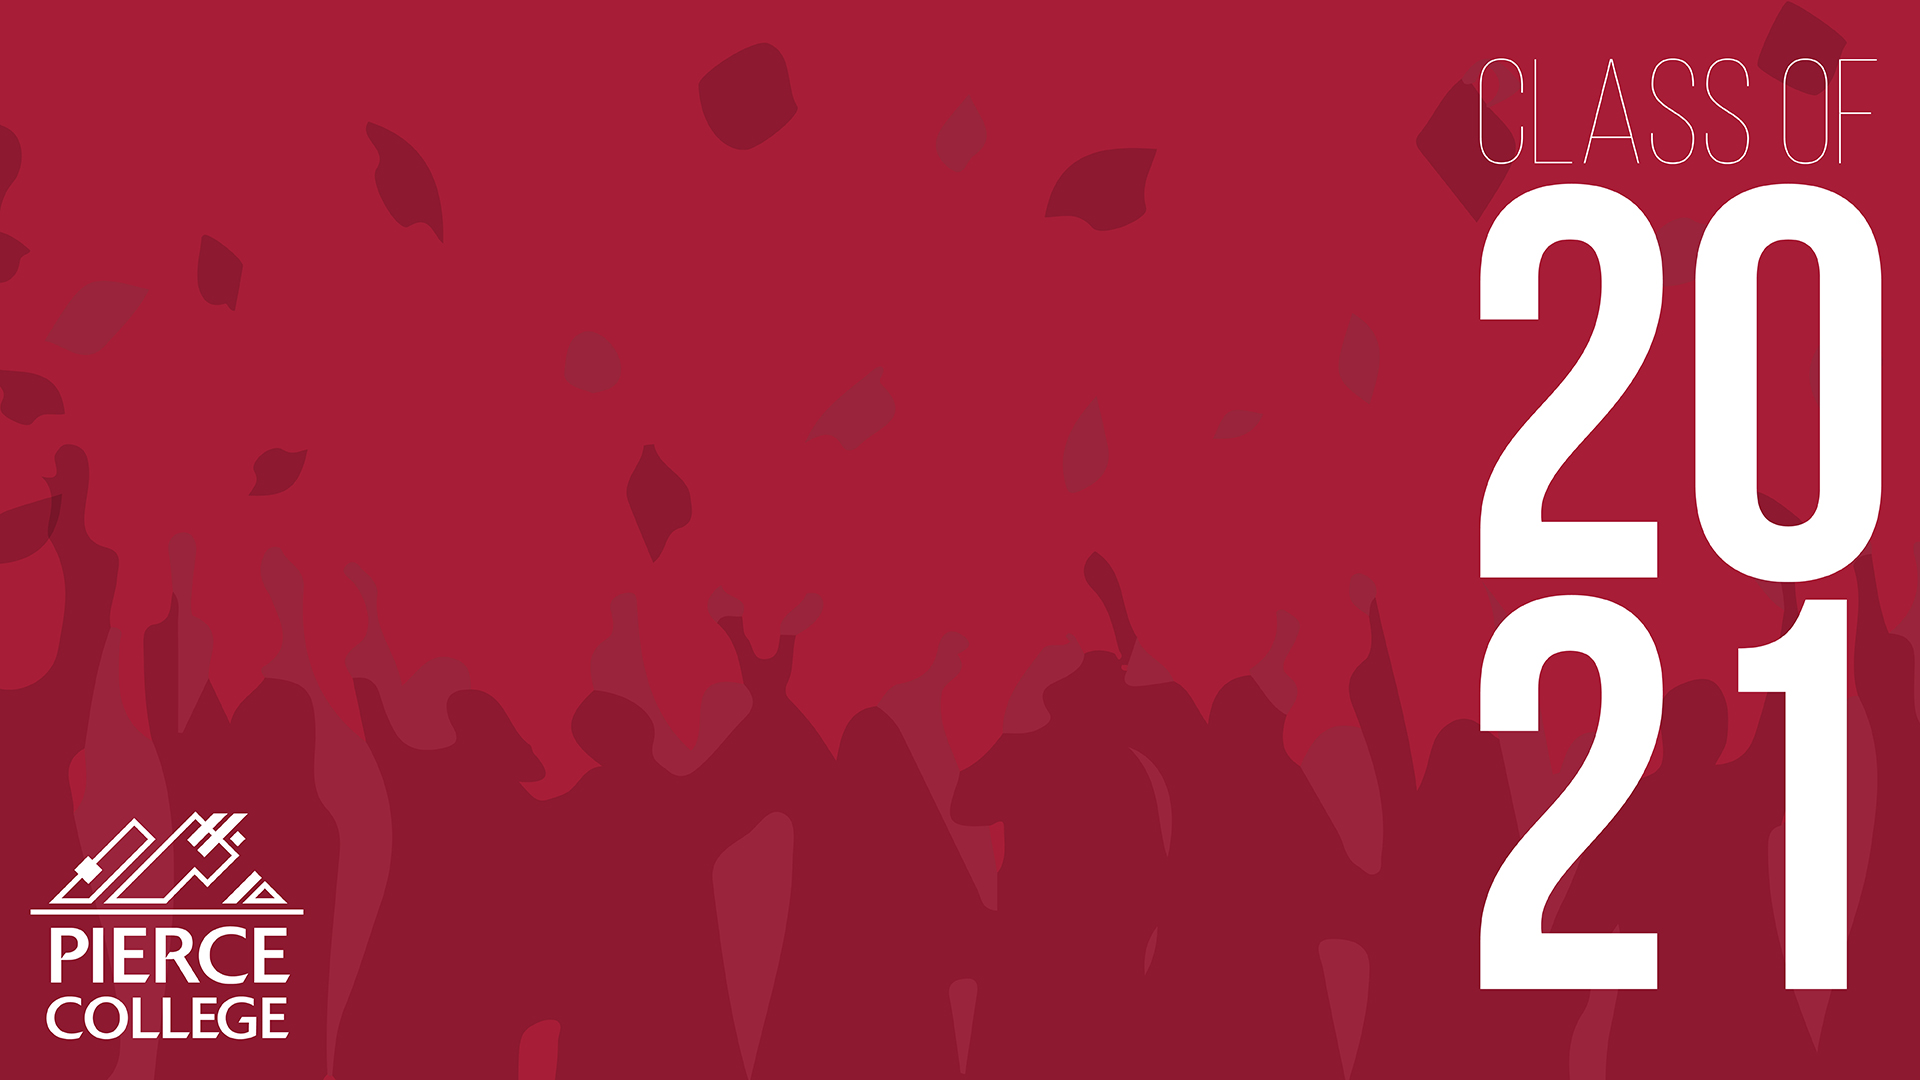 zoom background - illustration of graduates throwing caps